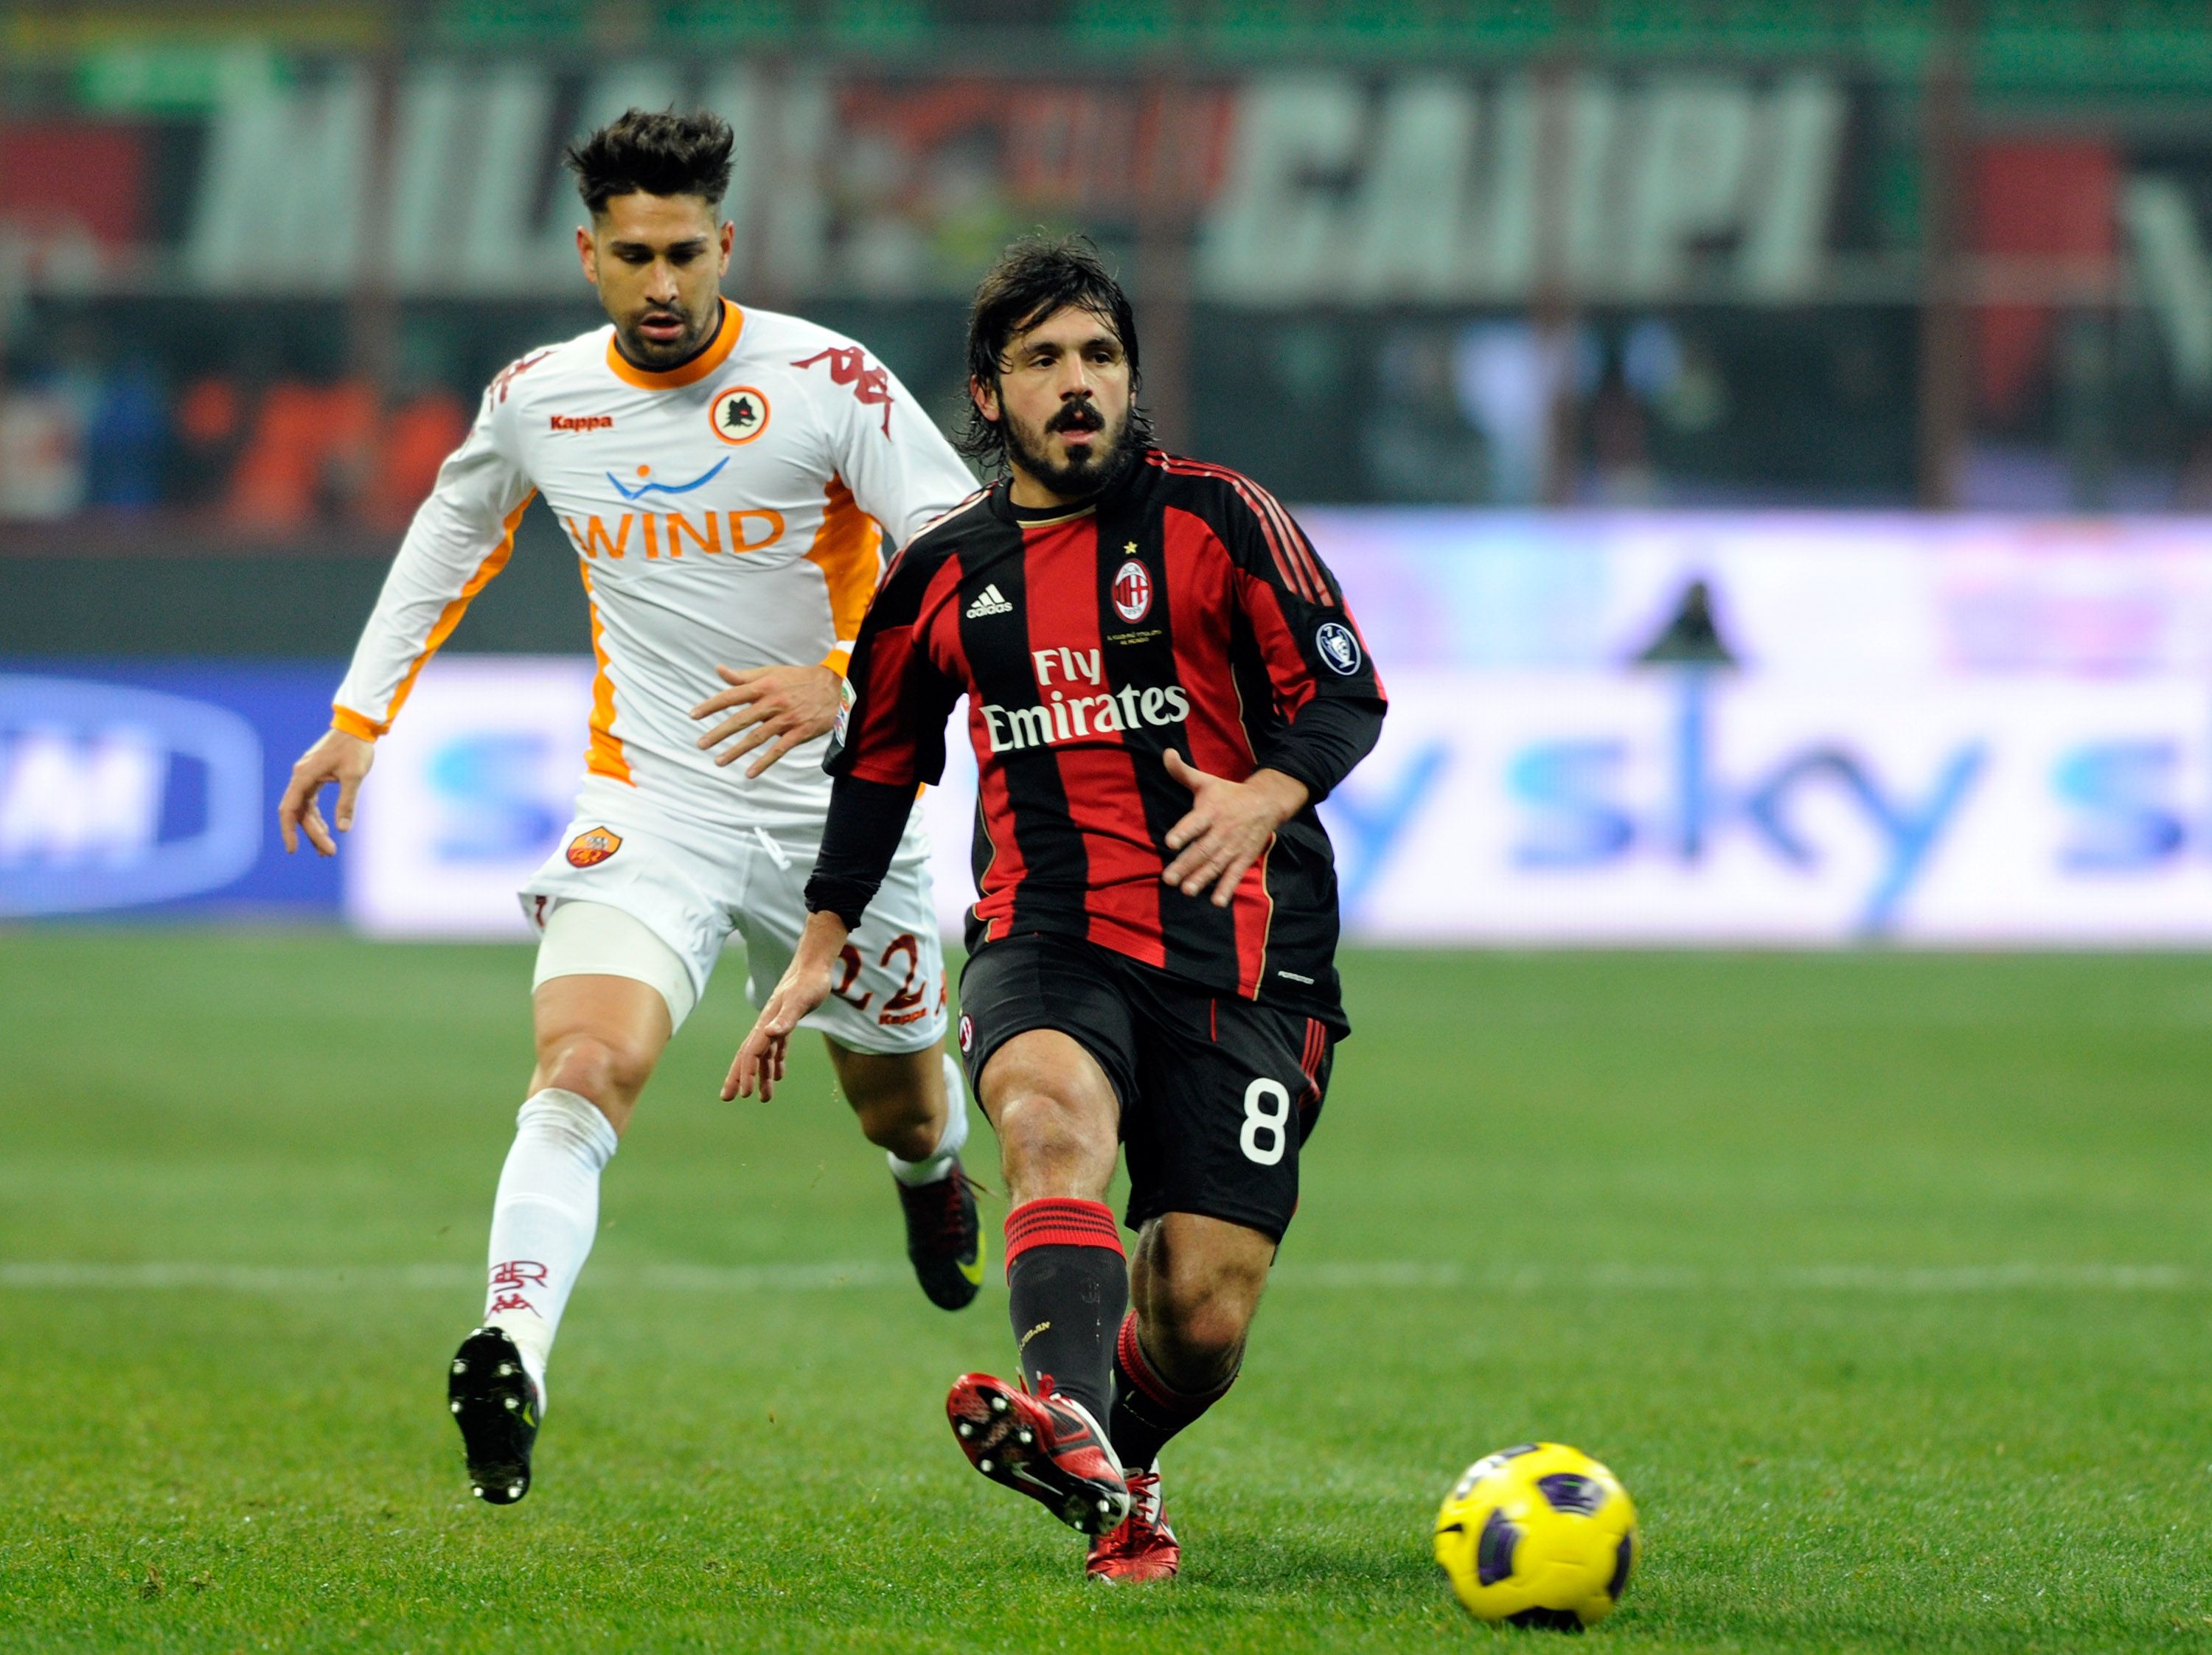 Gattuso enjoyed a stellar 2010/11 season